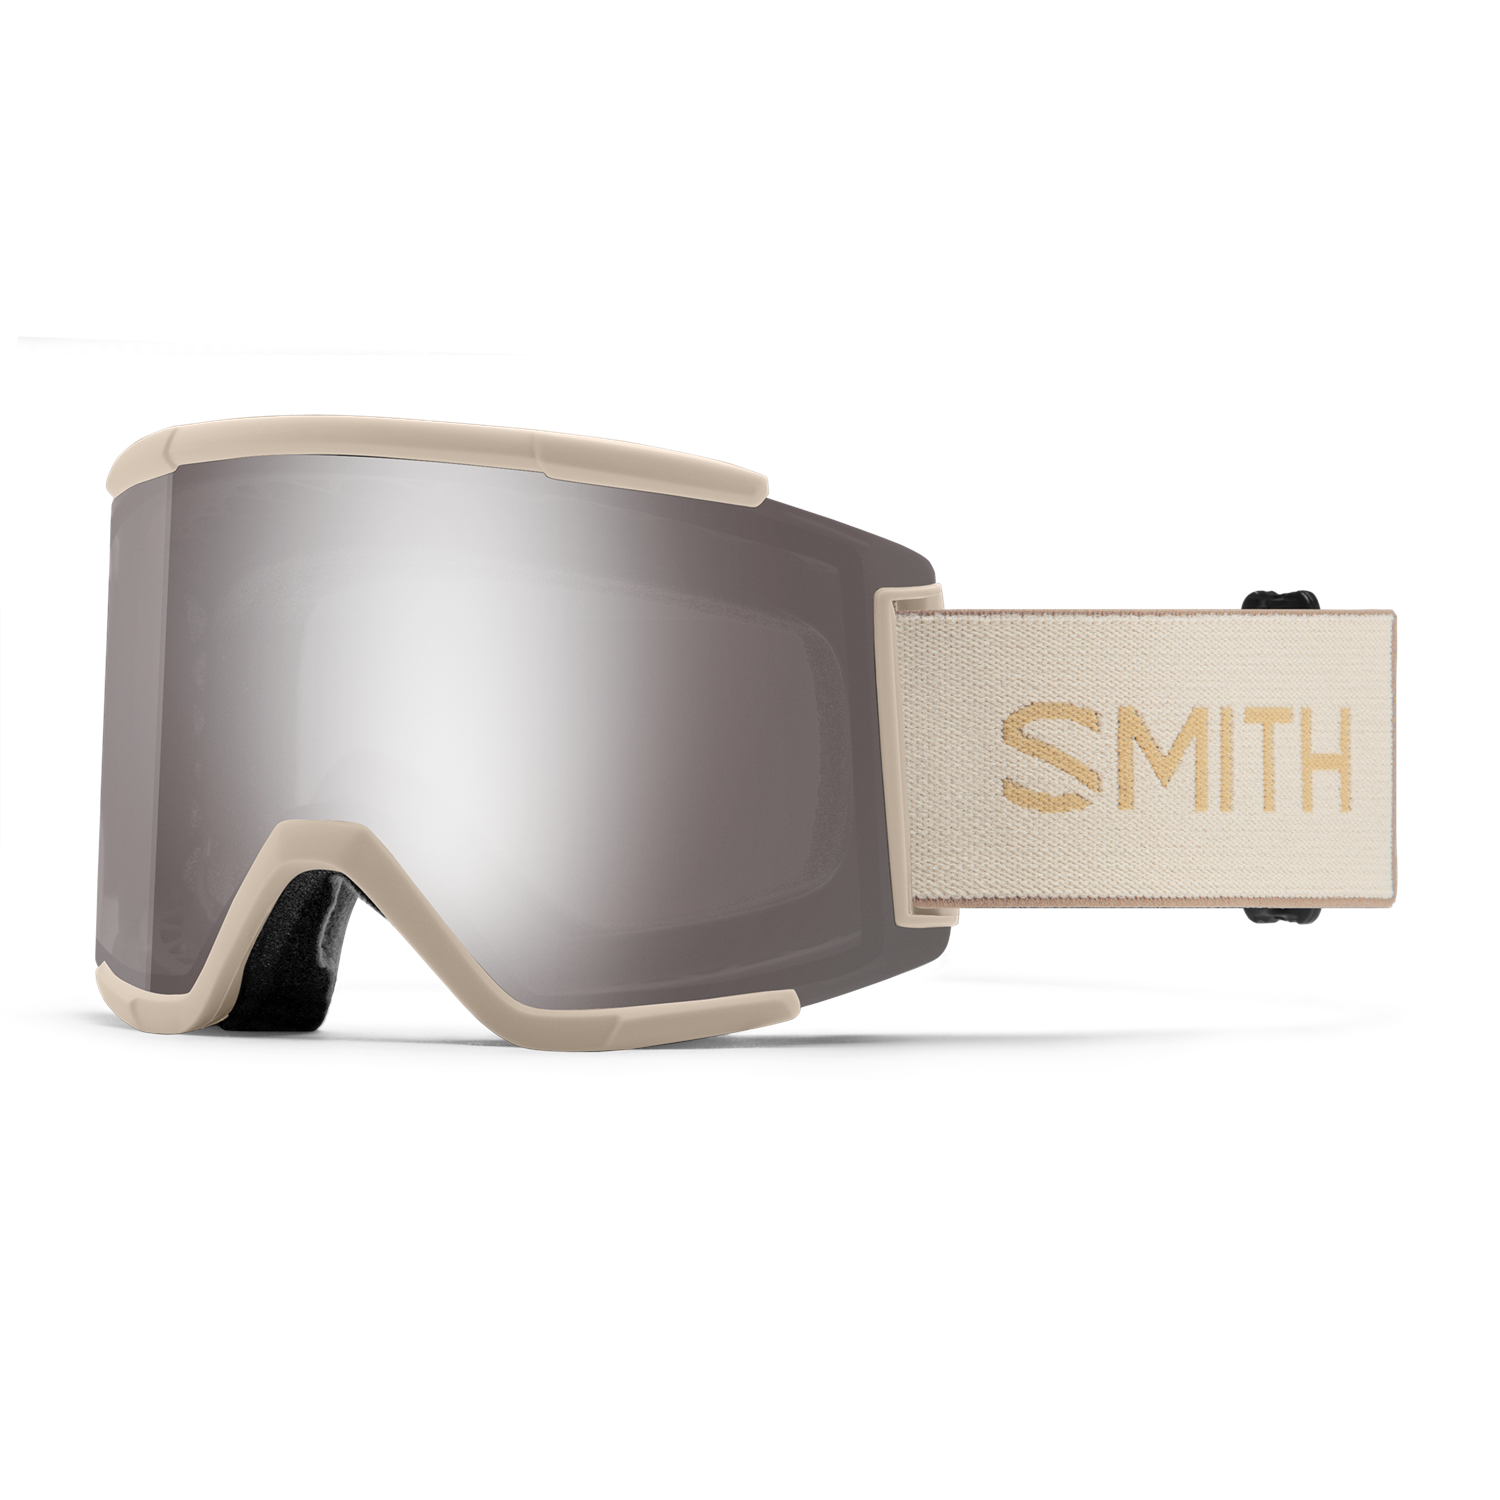 Smith Optics Squad XL ski snowboardbrille chromapop nuevo 